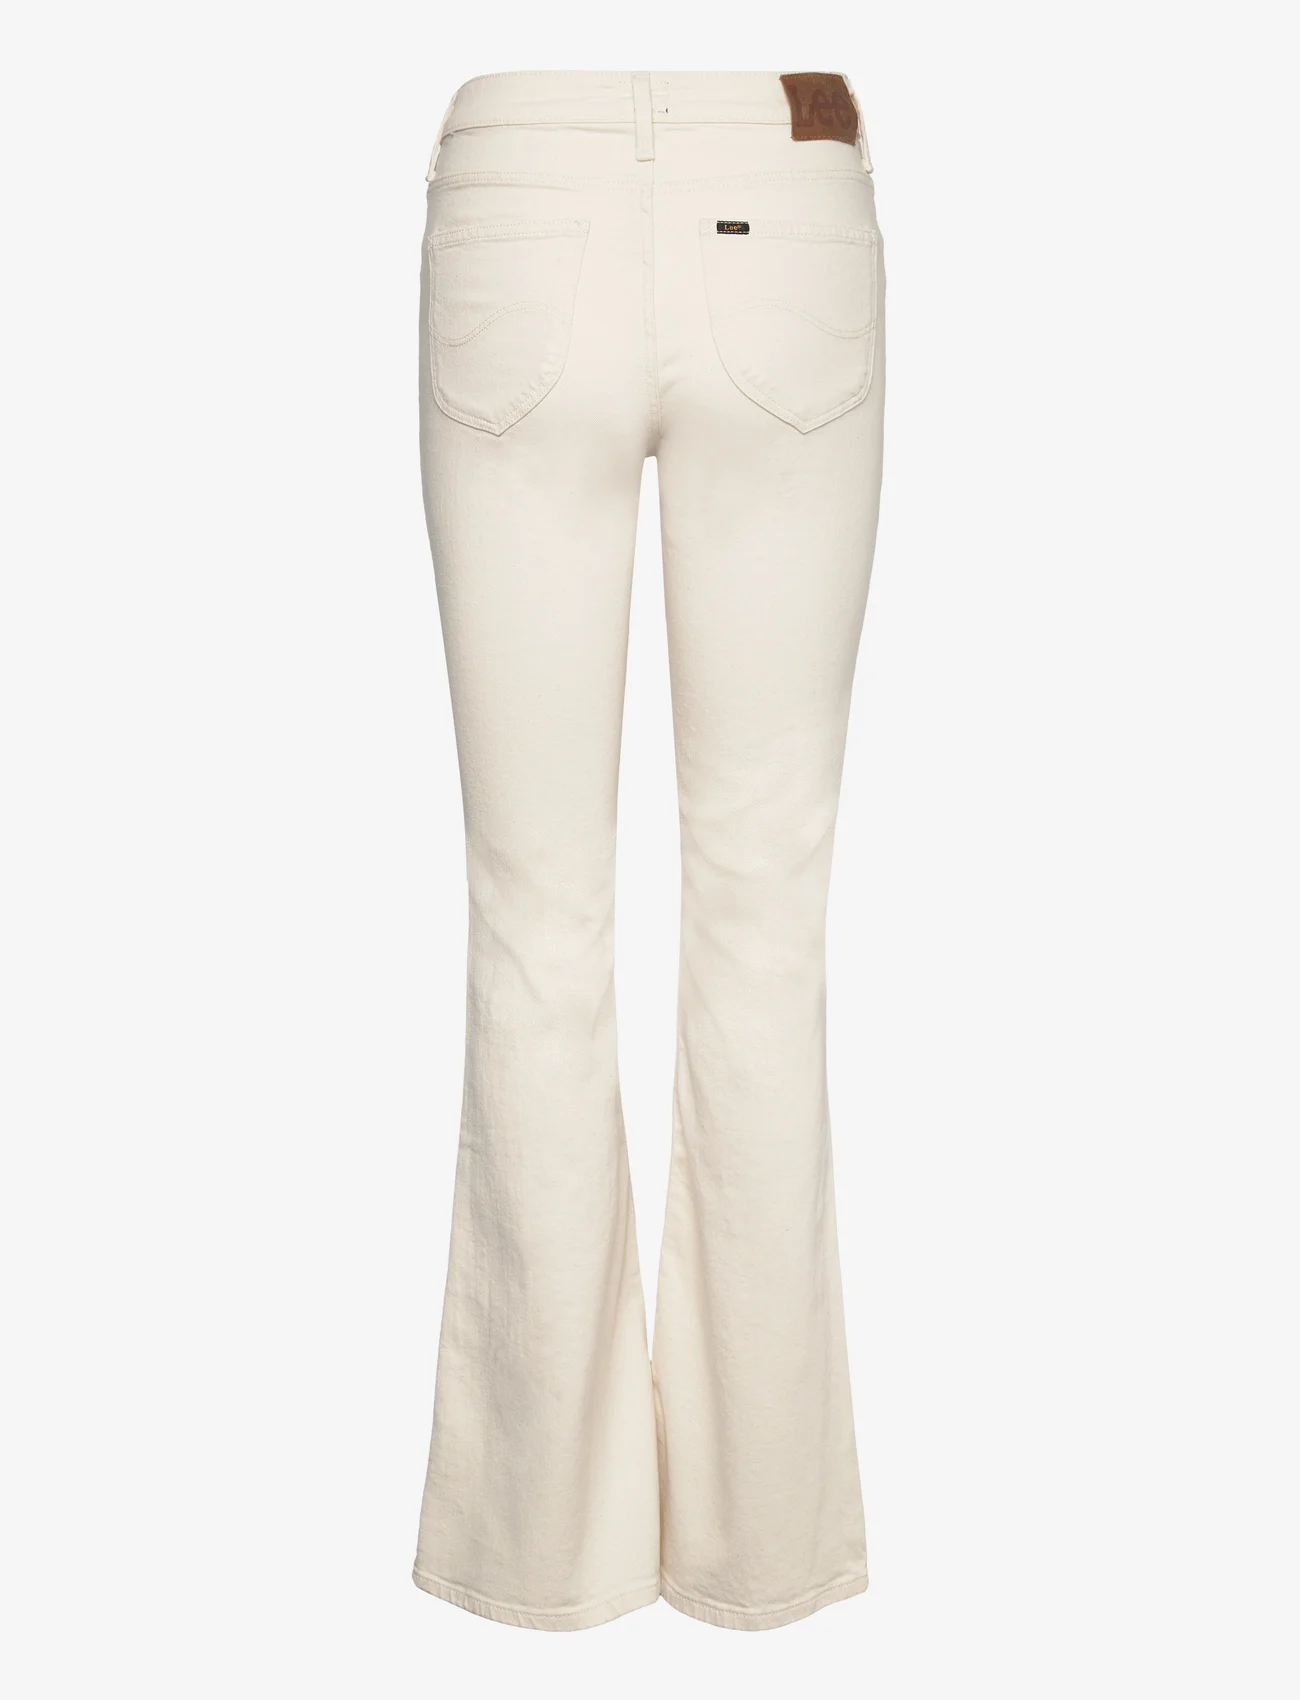 Lee Jeans - BREESE - flared jeans - ecru - 1